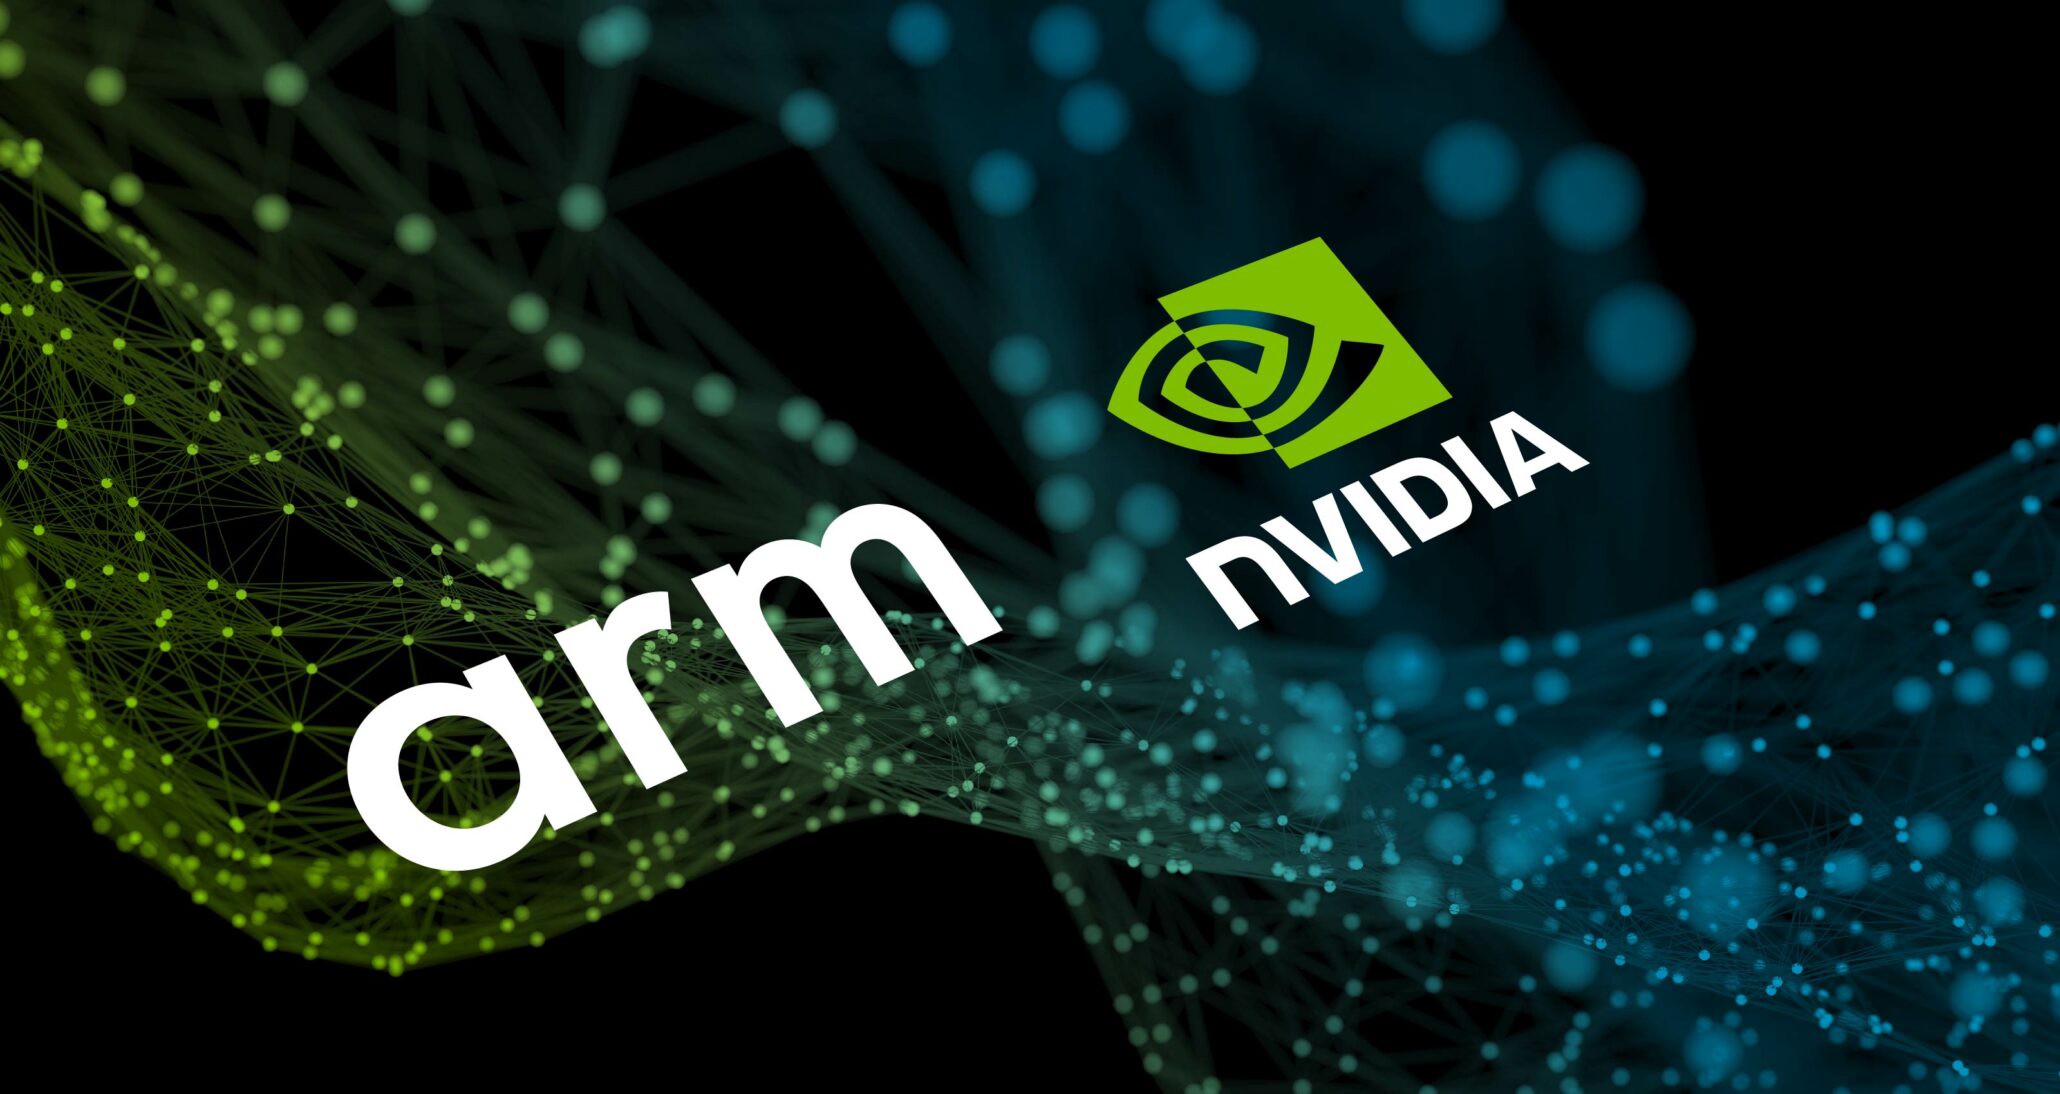 Ufficiale: NVIDIA acquisisce ARM per 40 miliardi di dollari thumbnail